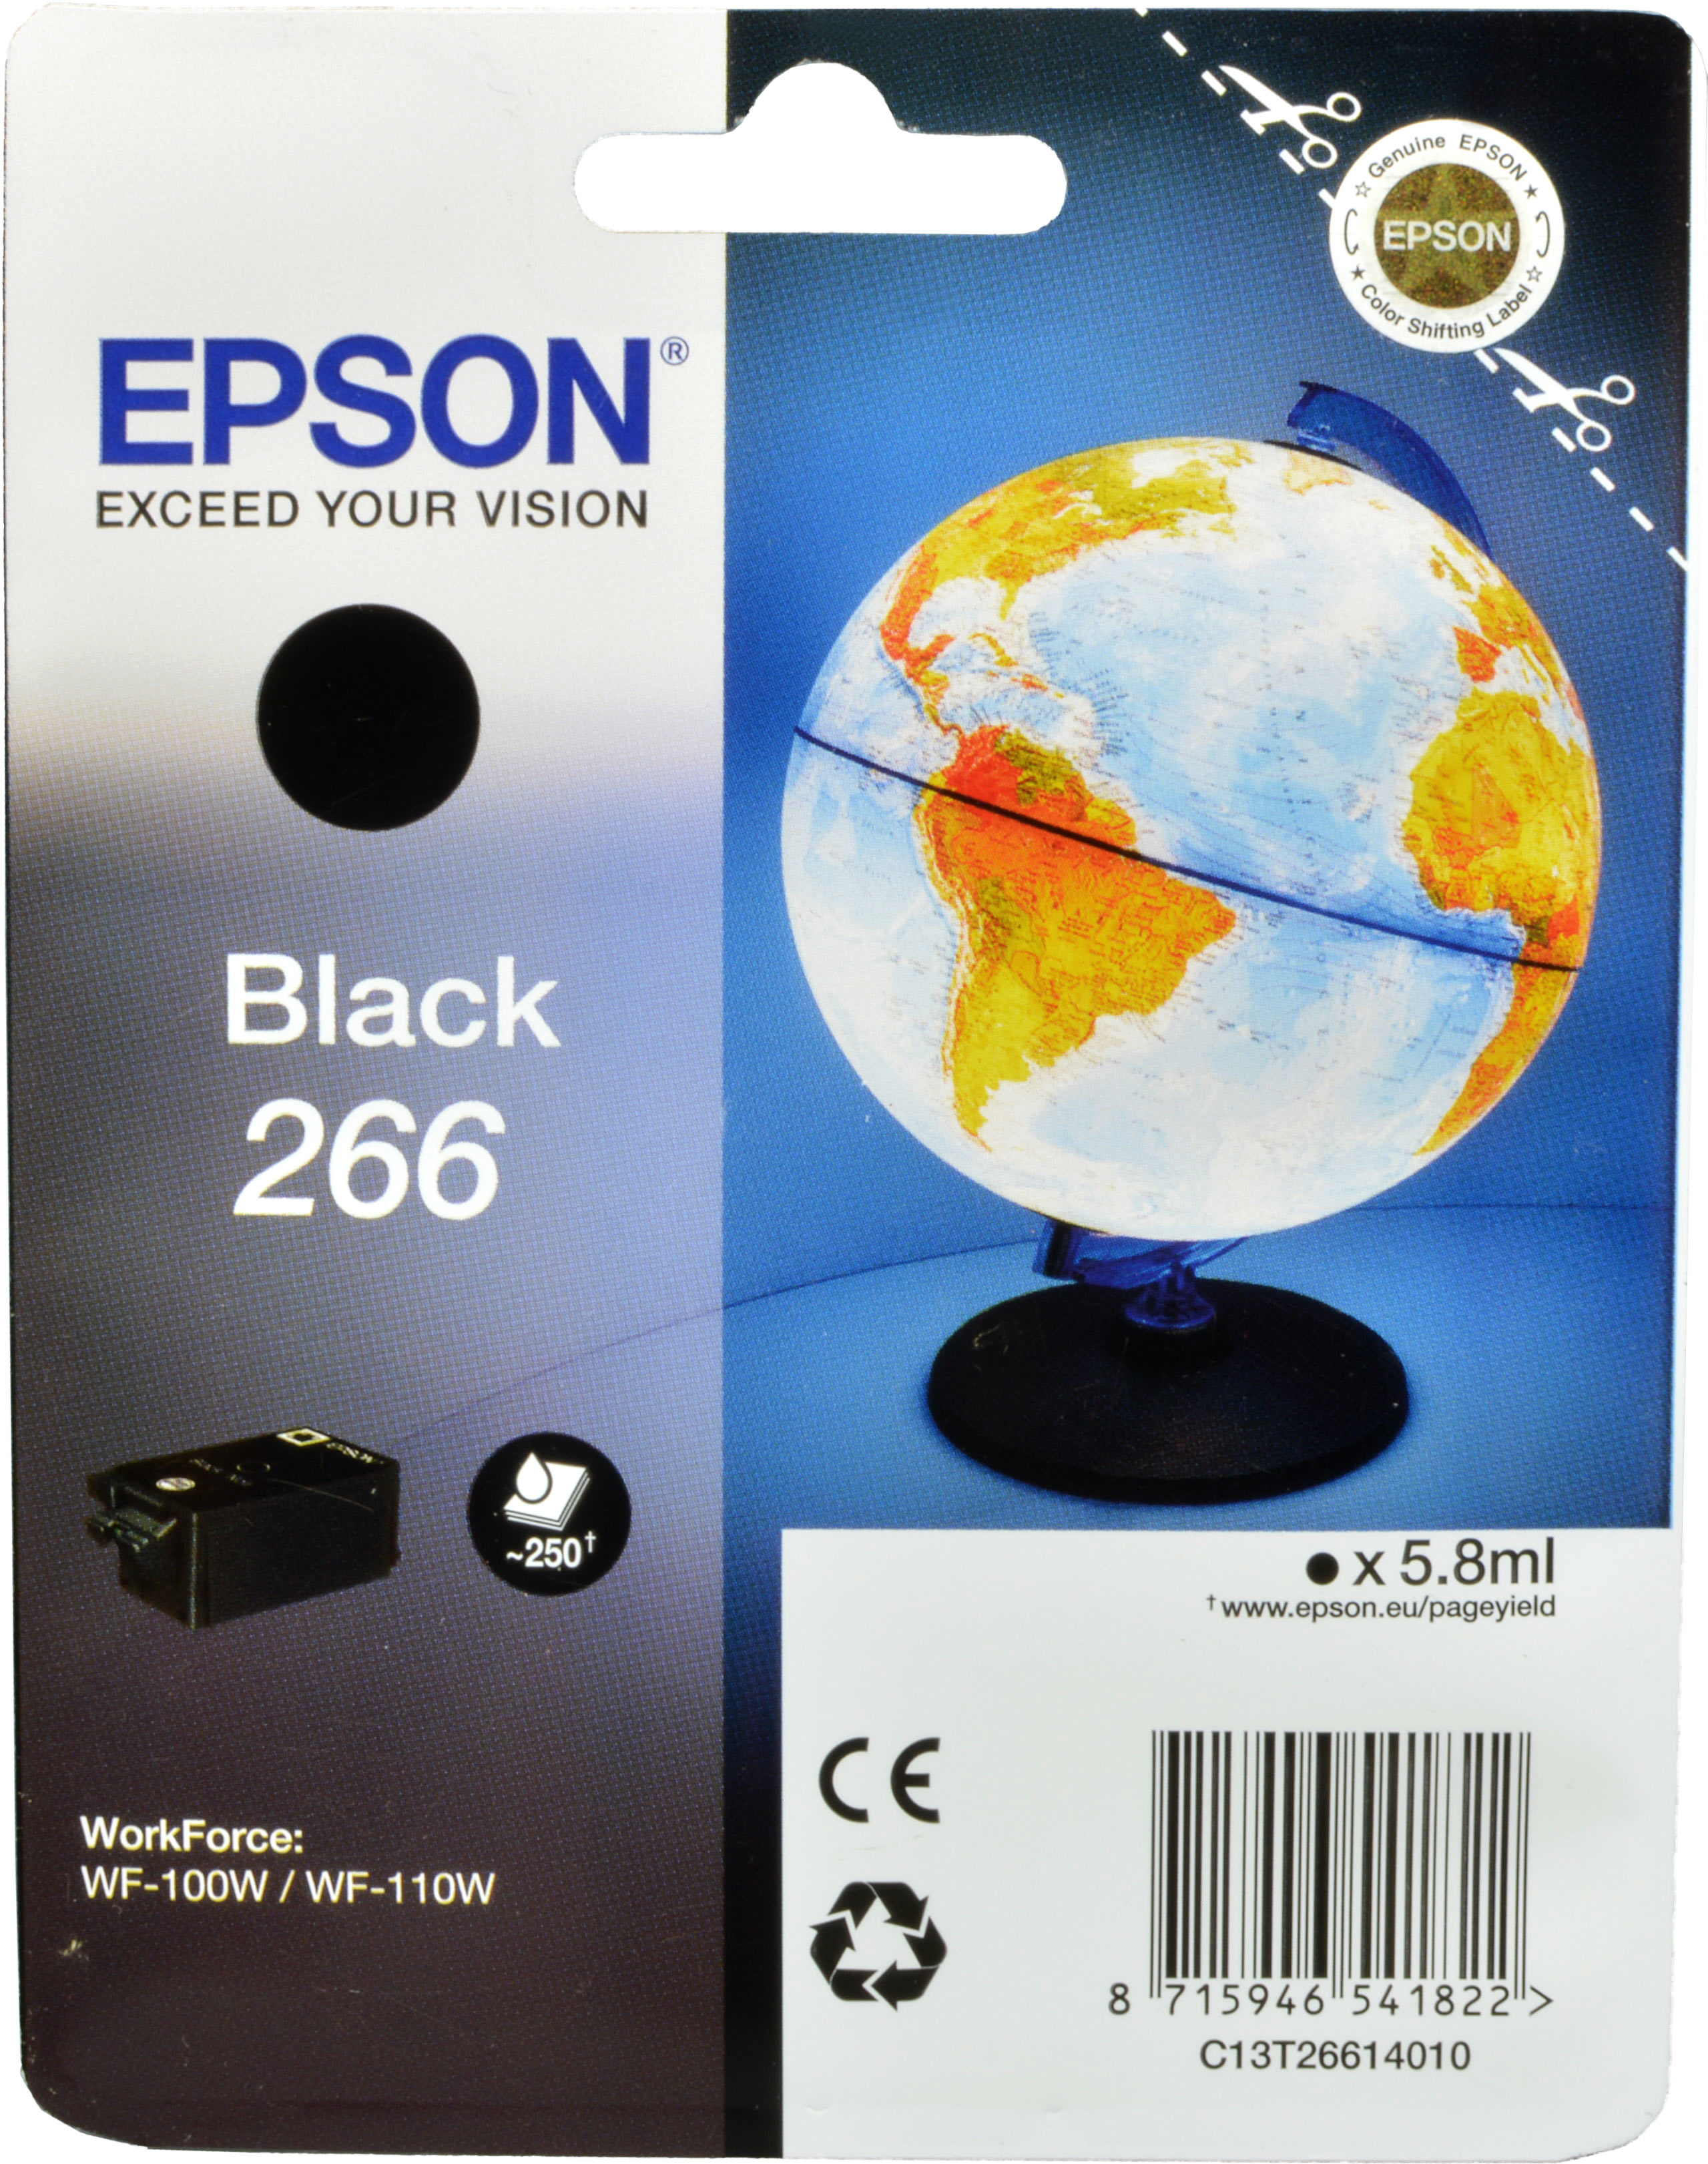 Epson Tinte C13T26614010 Black 266  schwarz